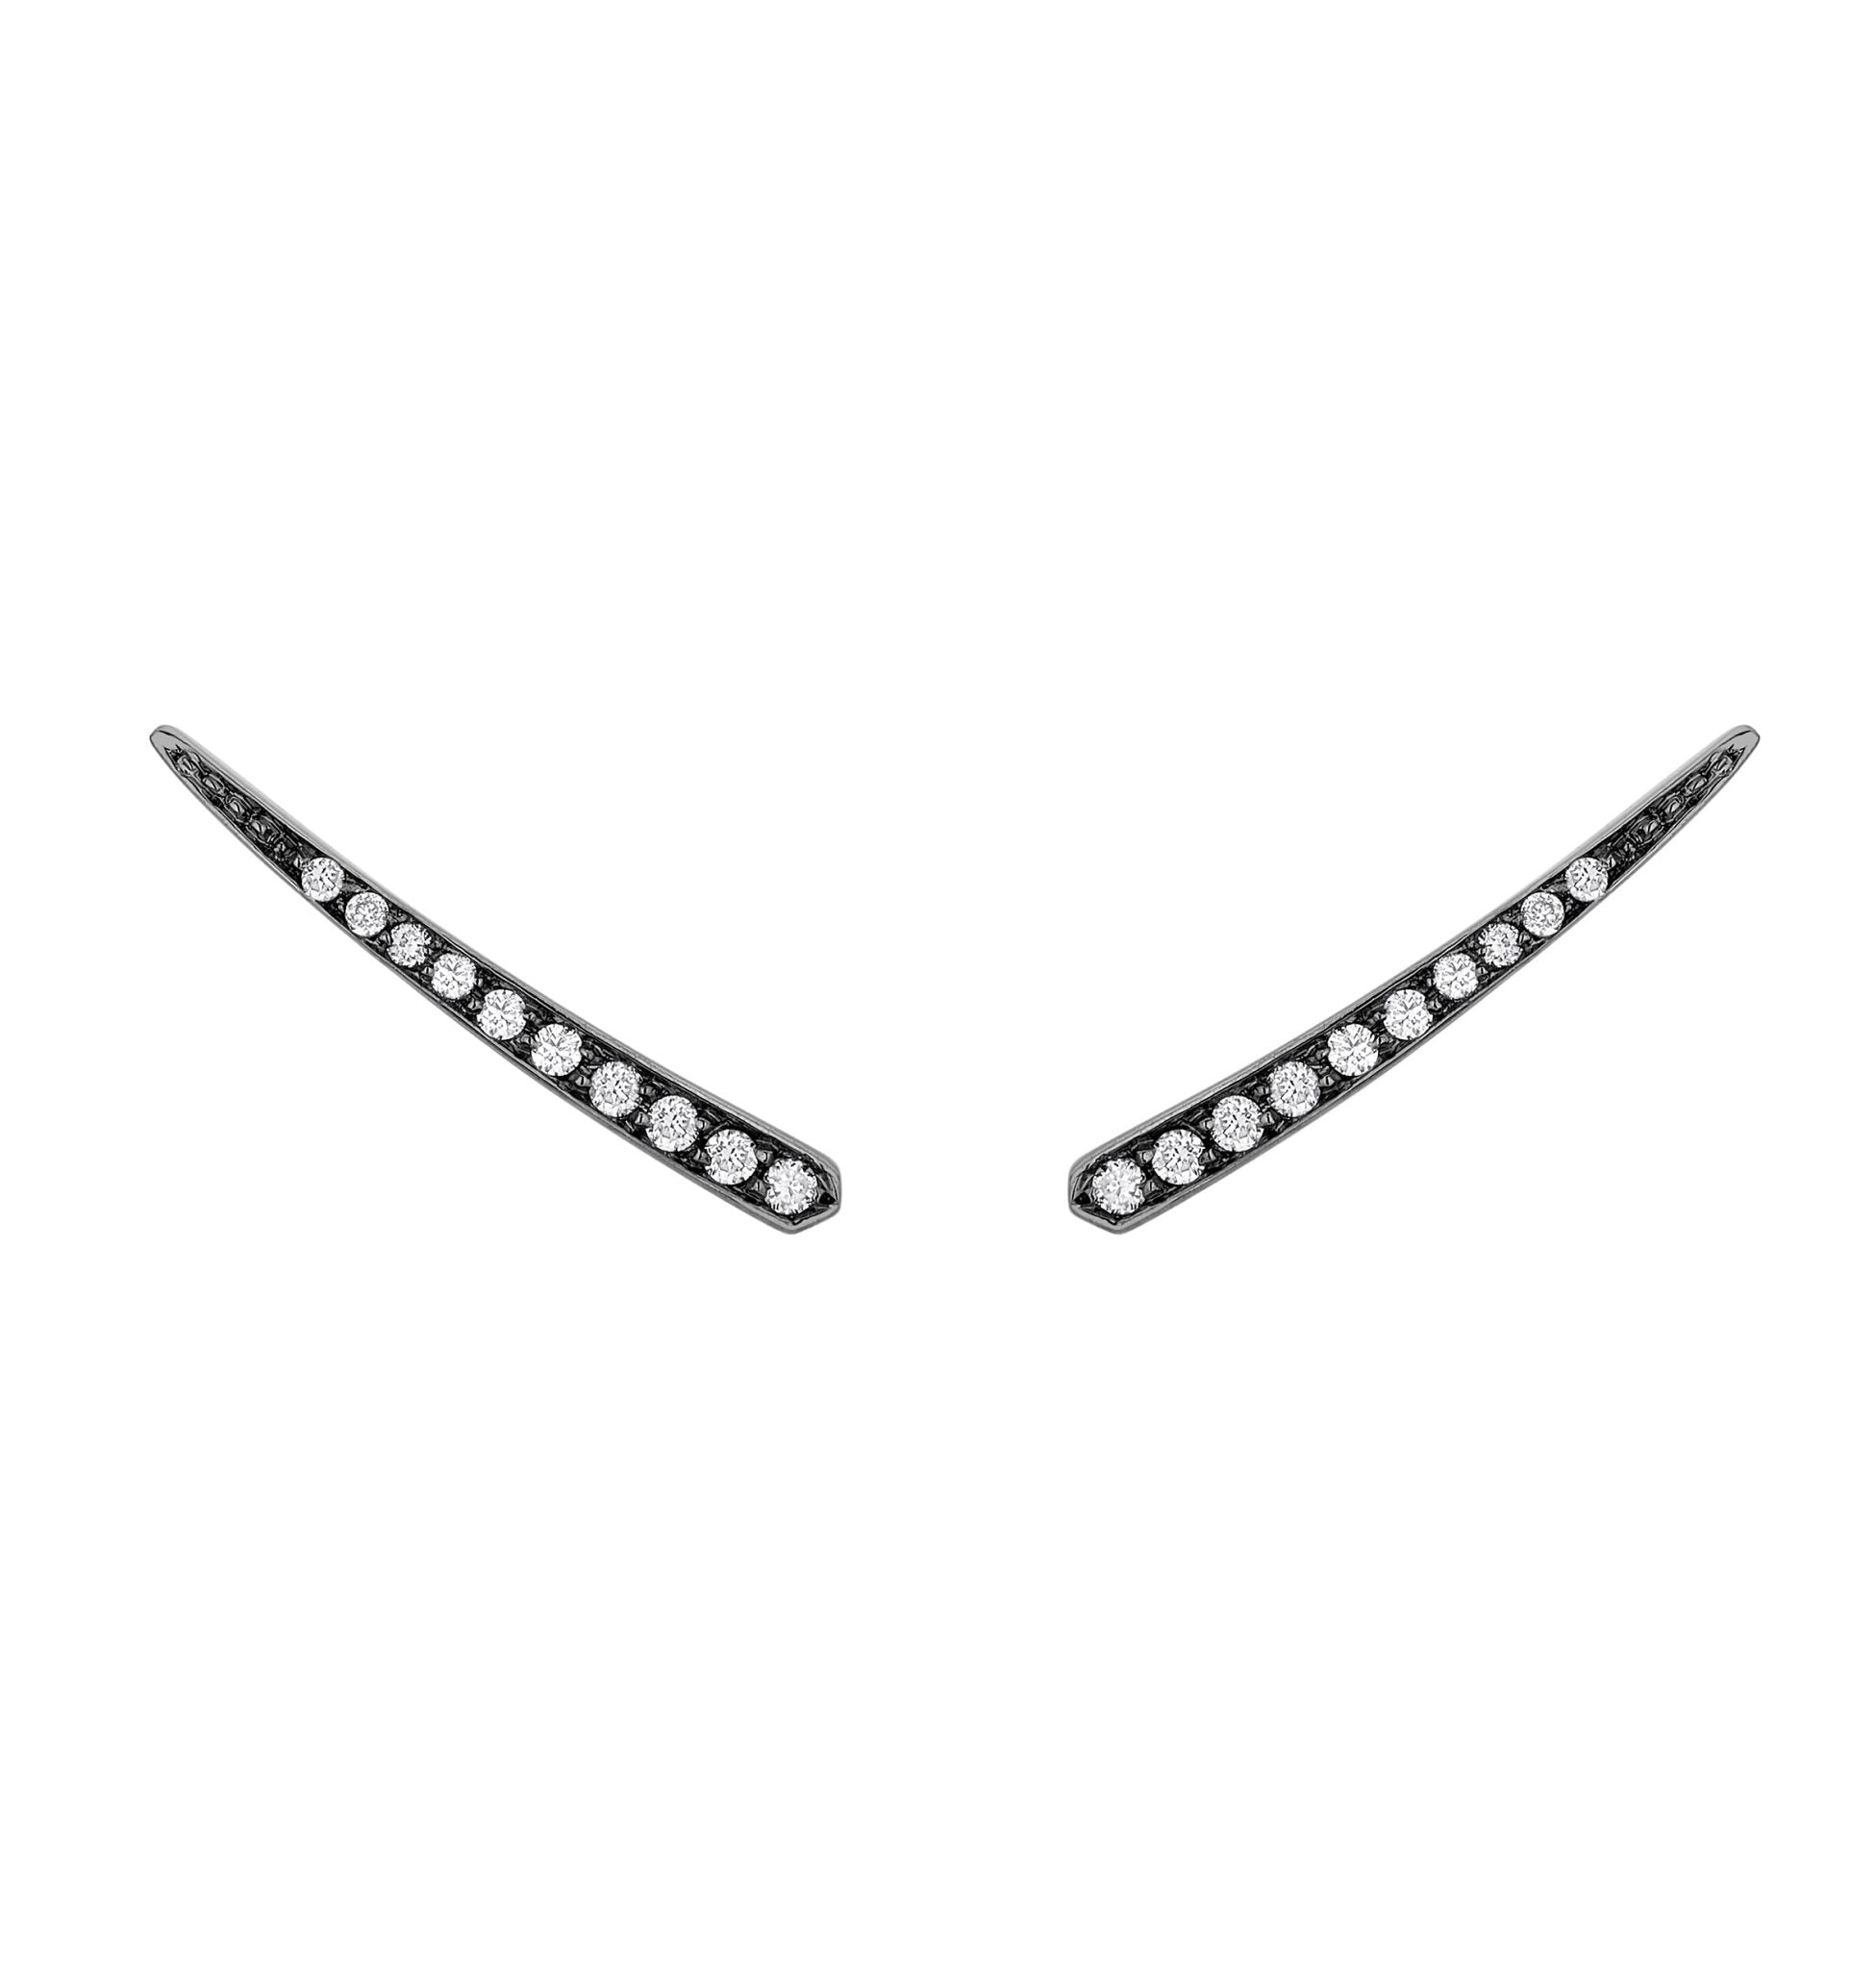 Brinco Ear Cuff Piscine | Ouro Branco 18K Com Ródio Negro E Diamantes - Jack Vartanian - Ear Cuffs